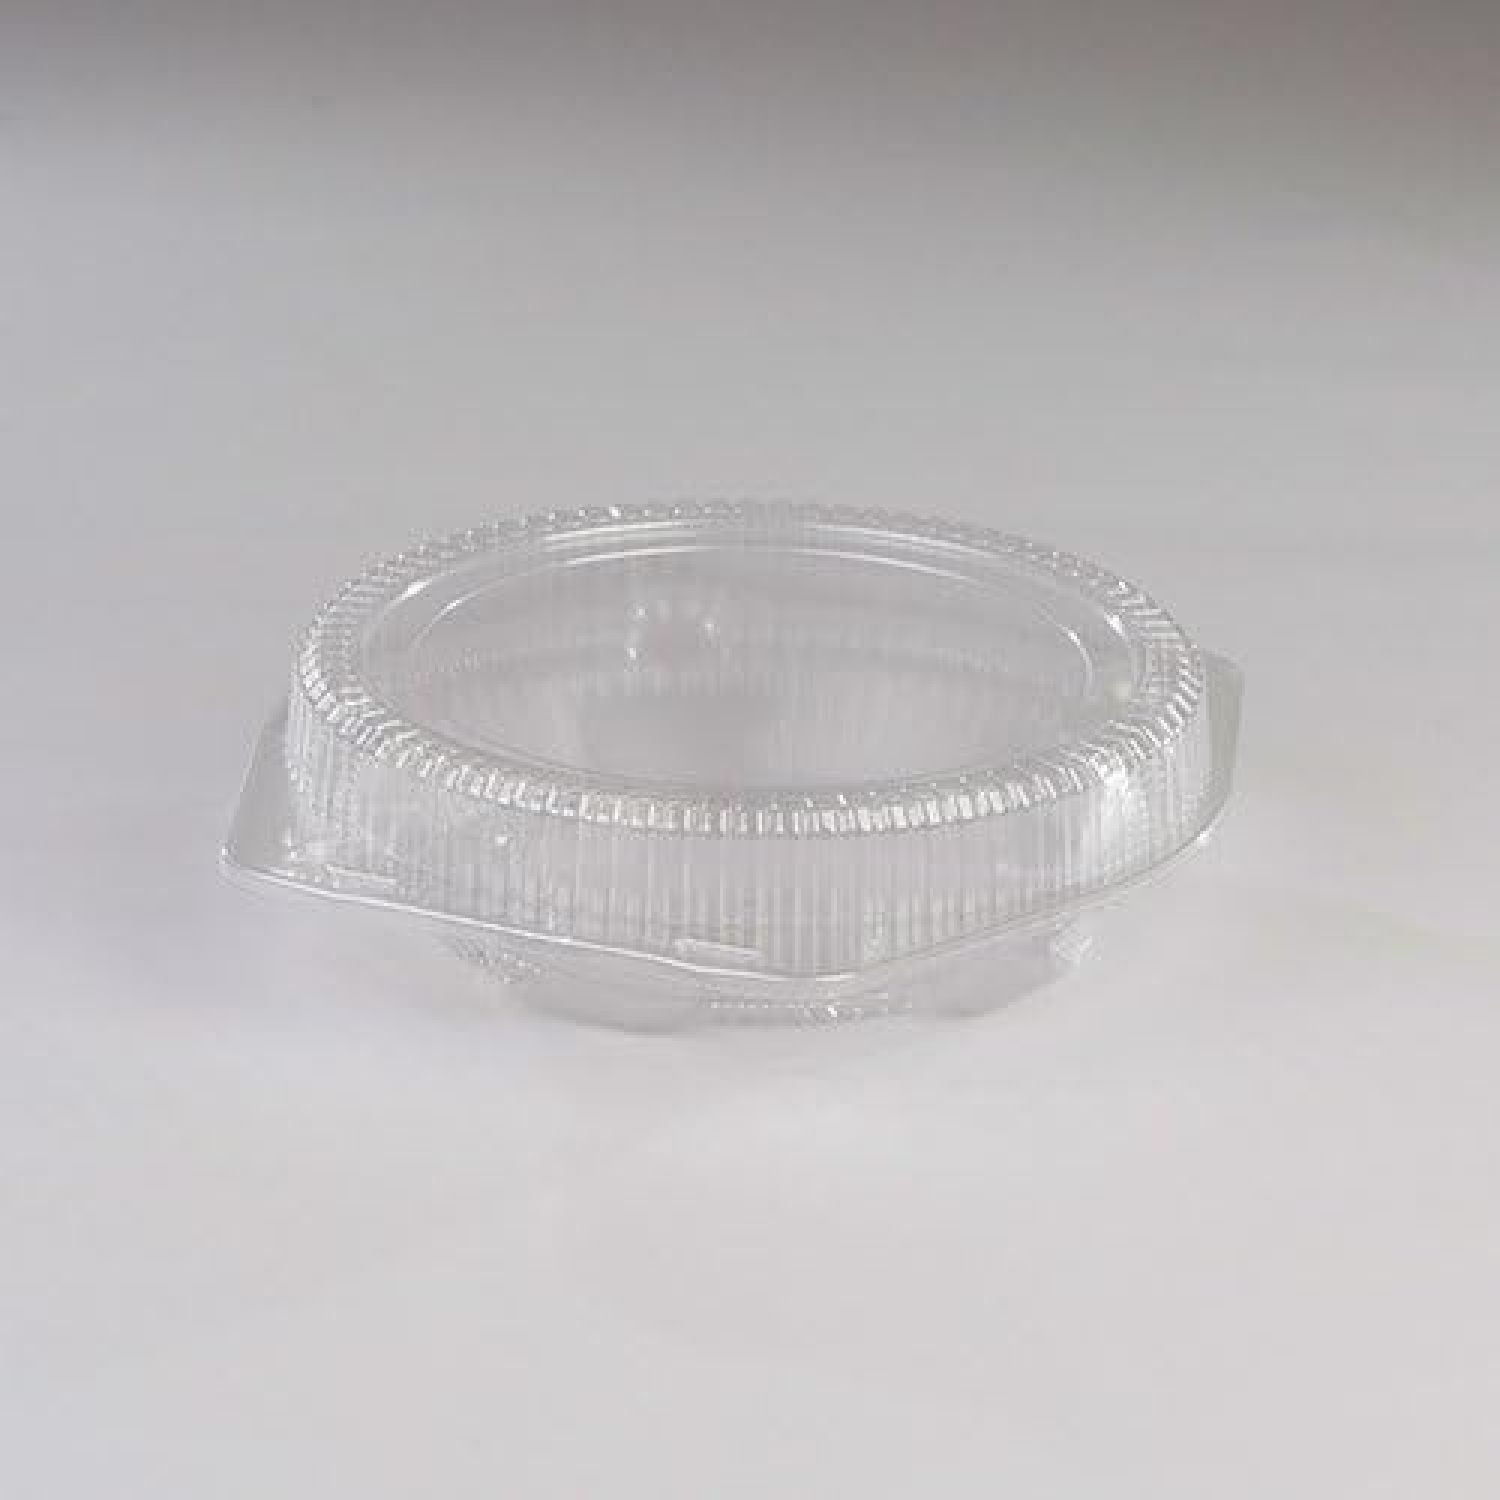  DFI LBH991 - 9 Clear Round Plastic Hinged Pie